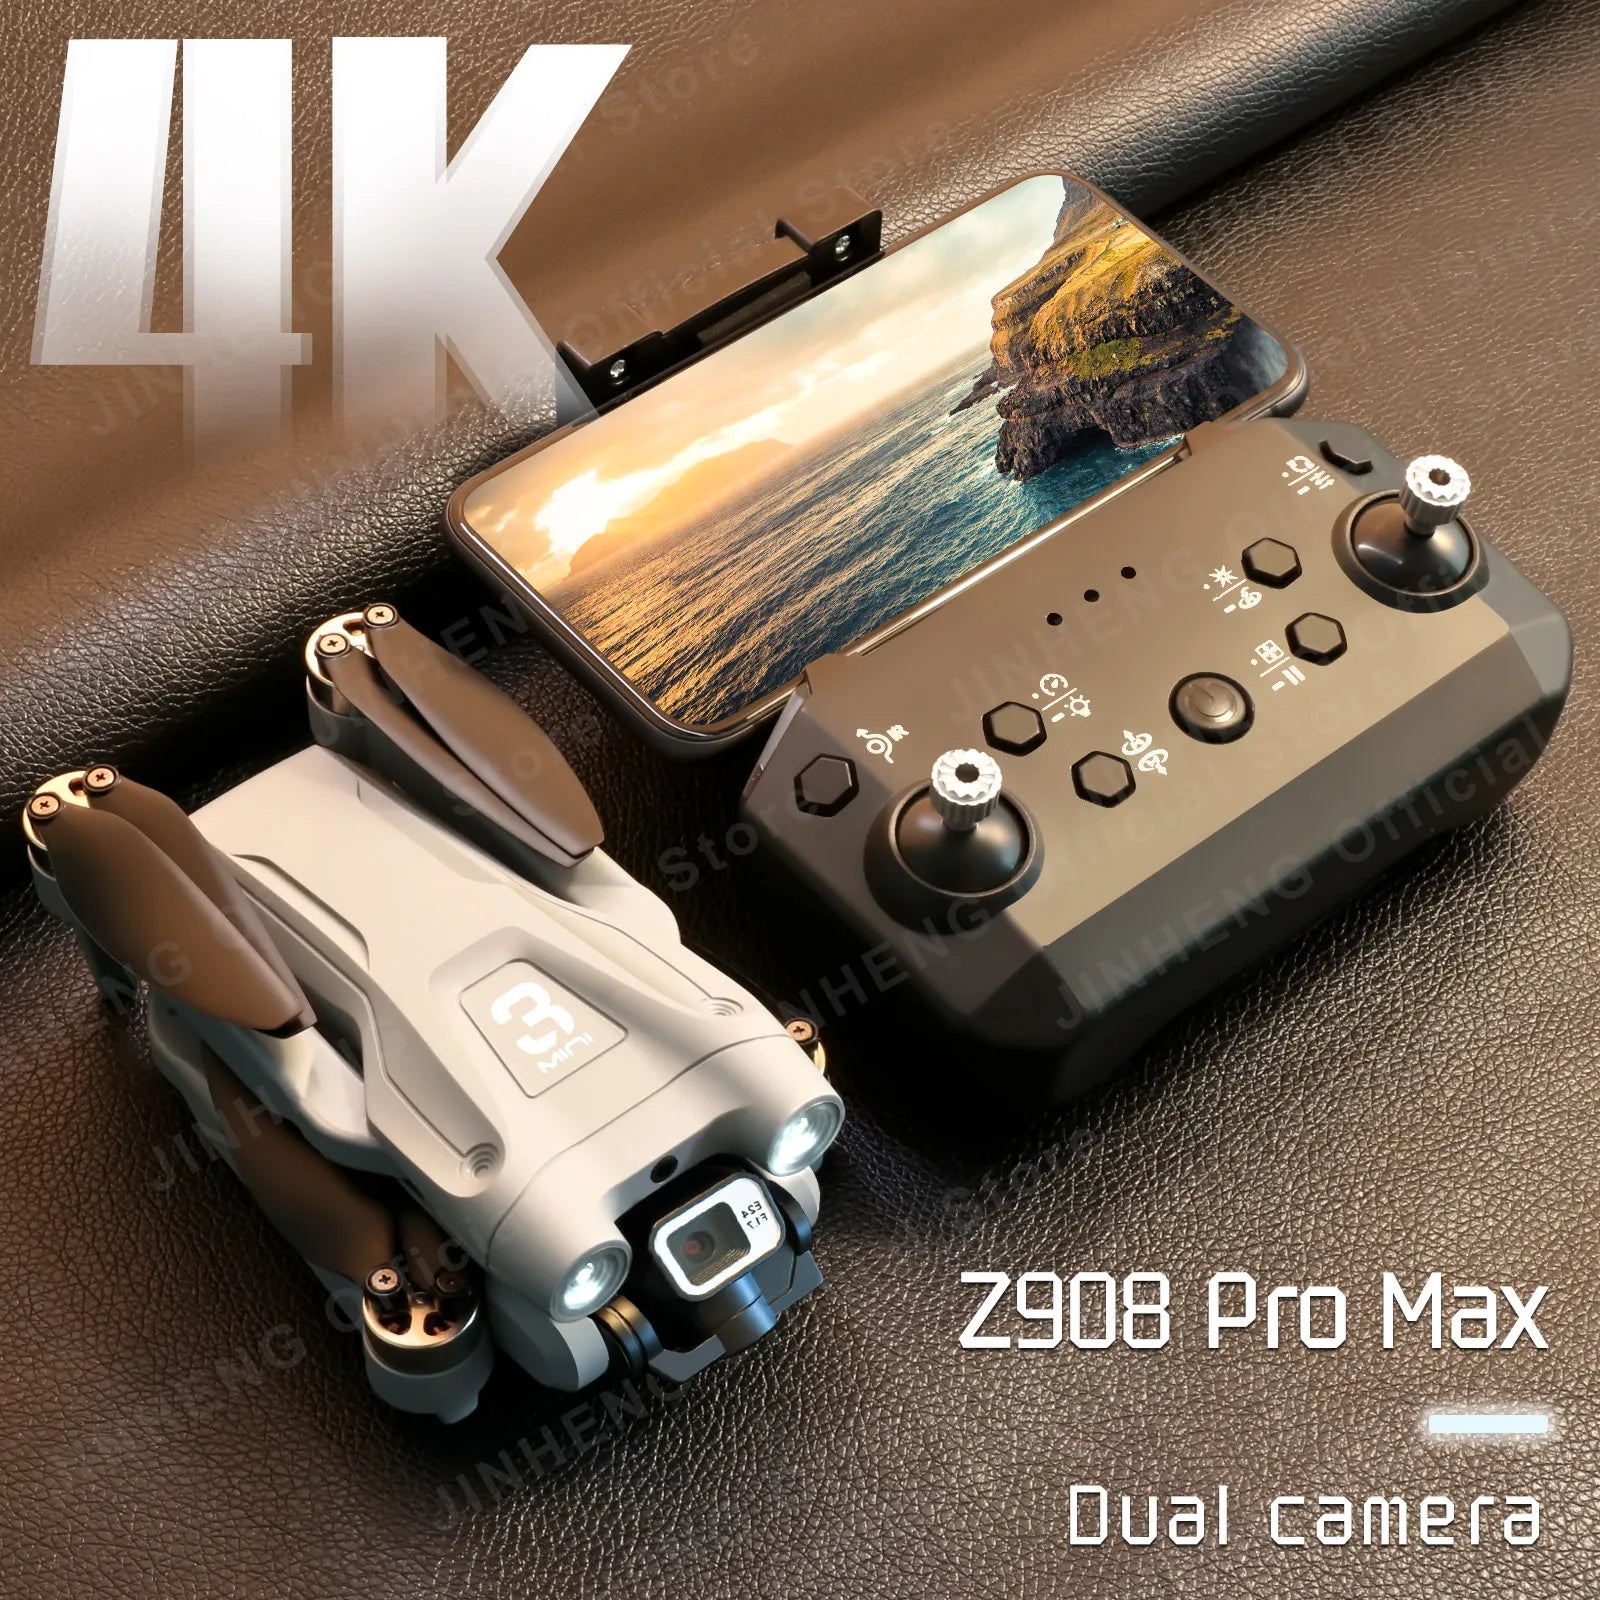 Load video: MINI Z908 Pro Max Dual 4K Professional Drone